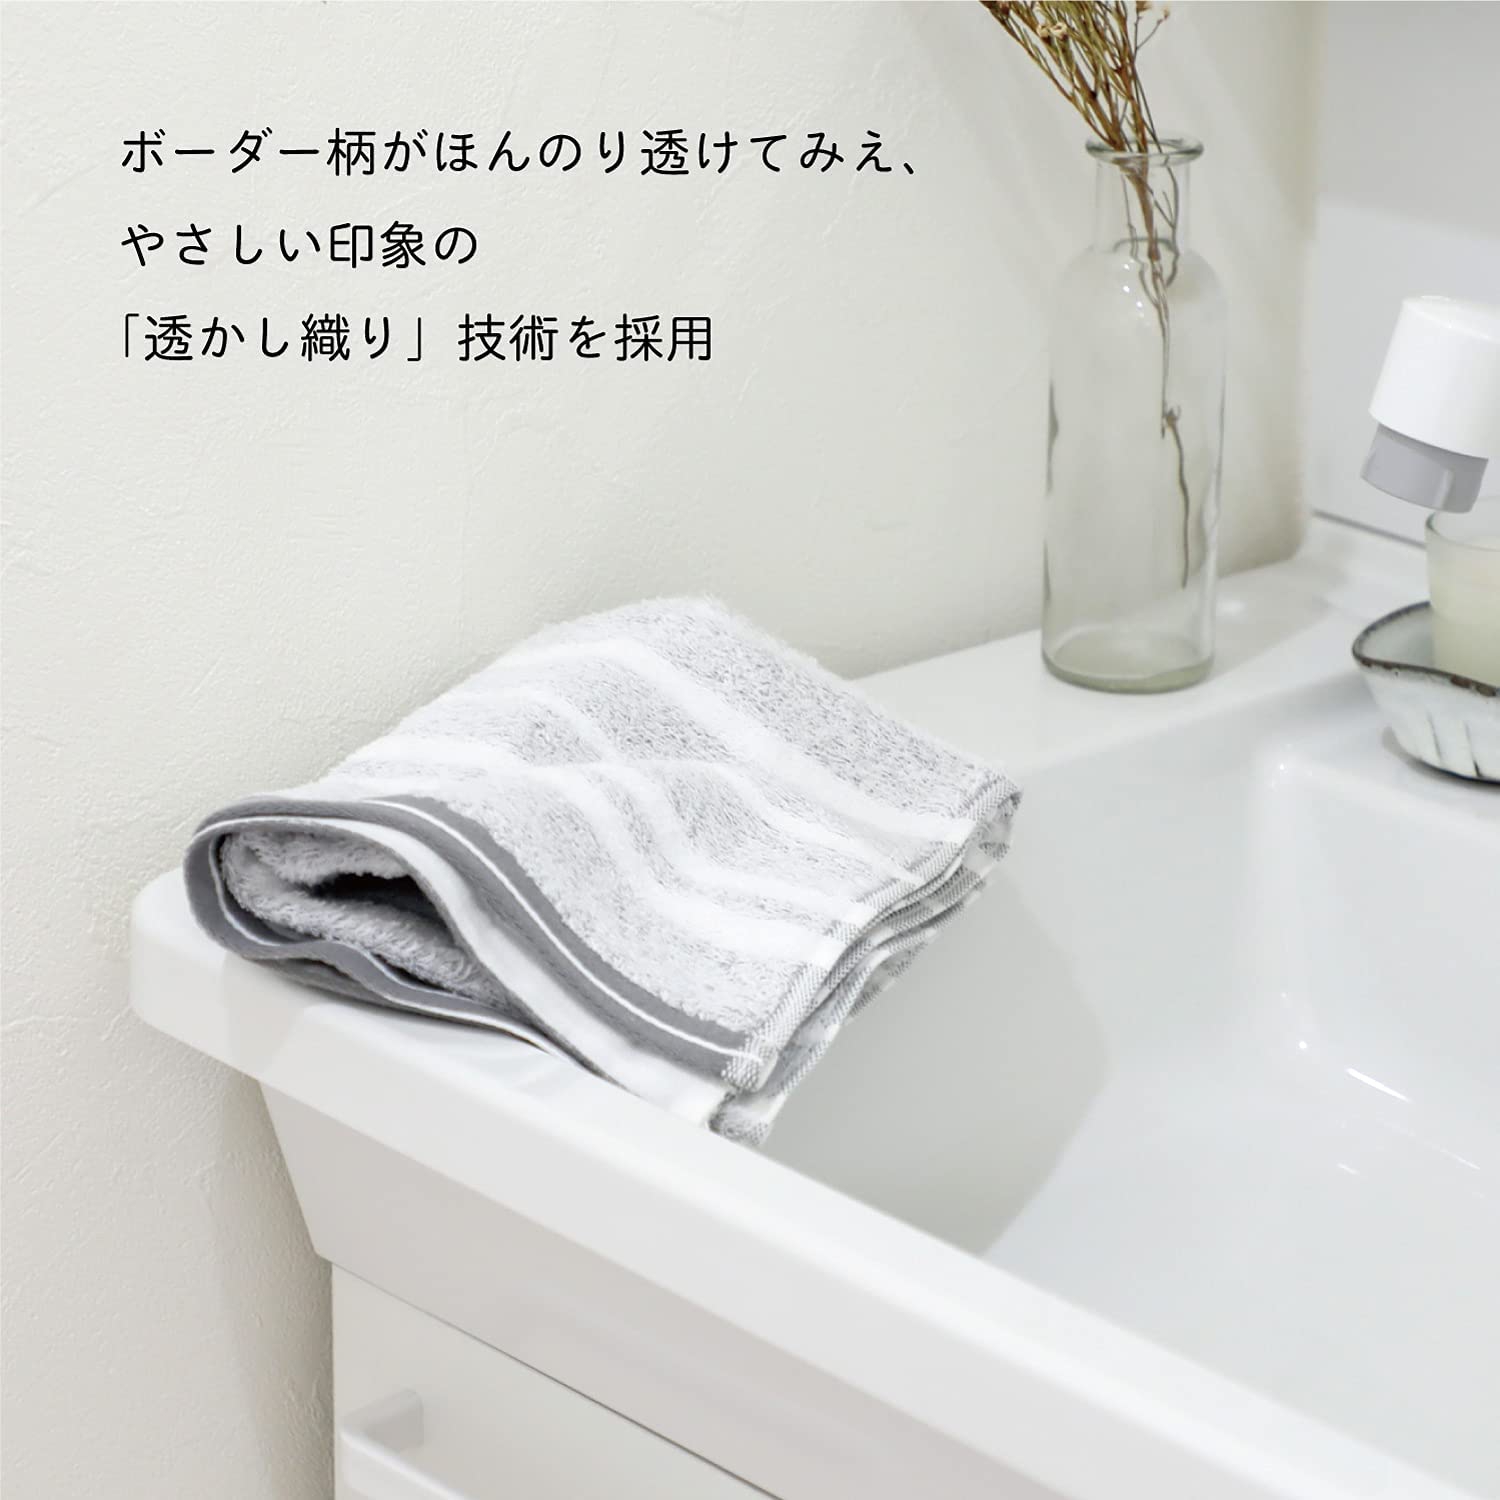 TANGONO(タンゴノ) Border towel バスタオルの商品画像7 